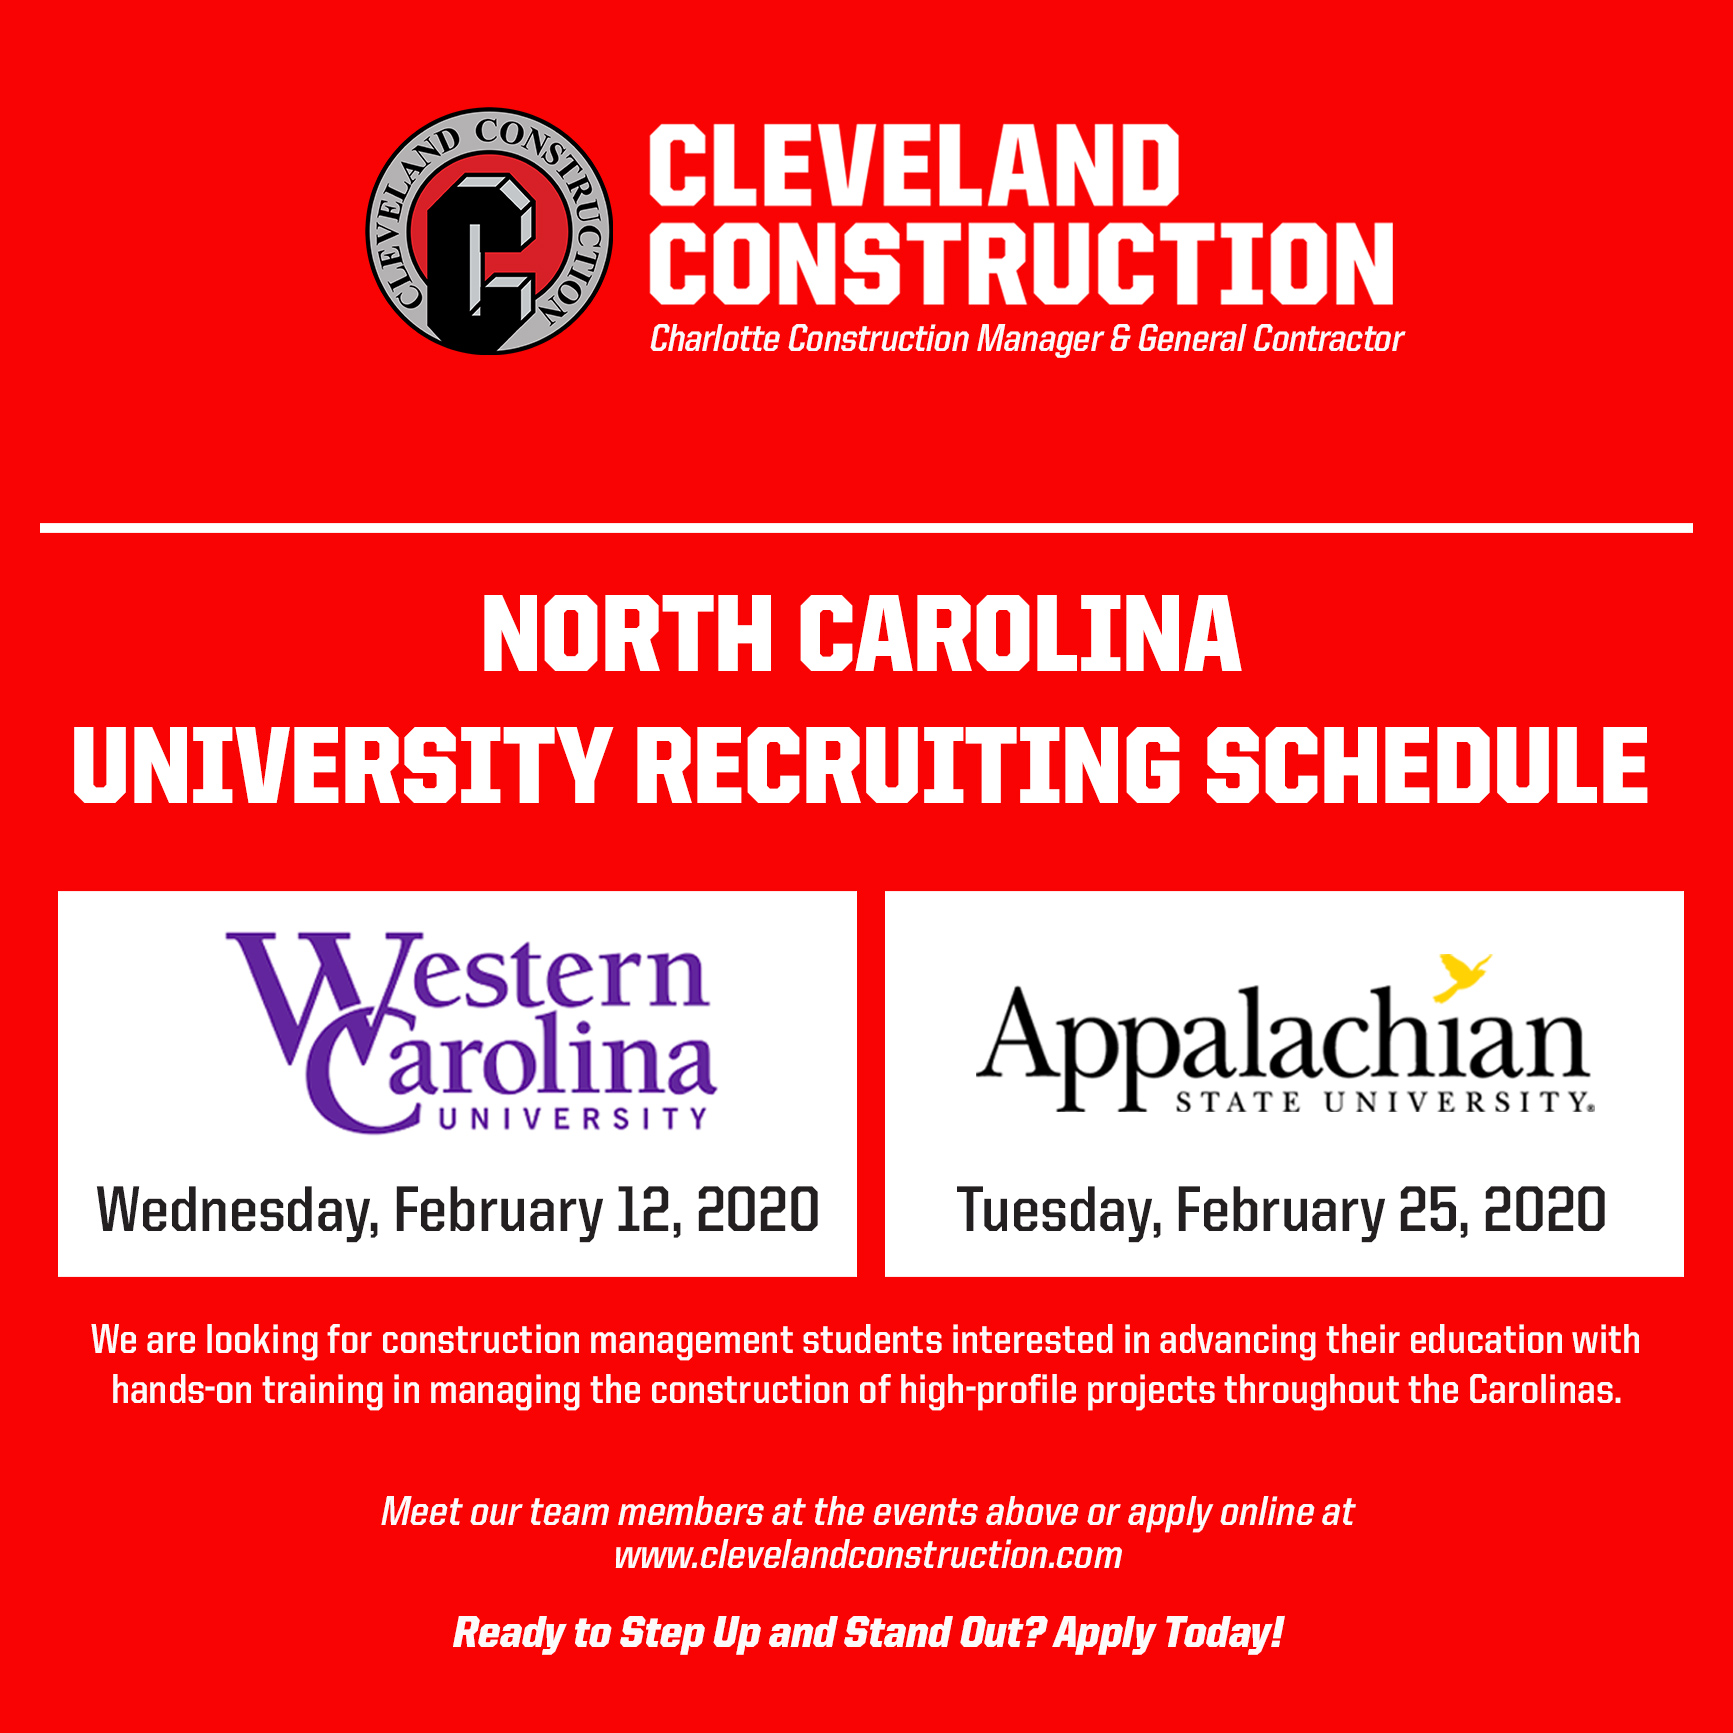 University Recruiting Events in North Carolina - Spring 2020